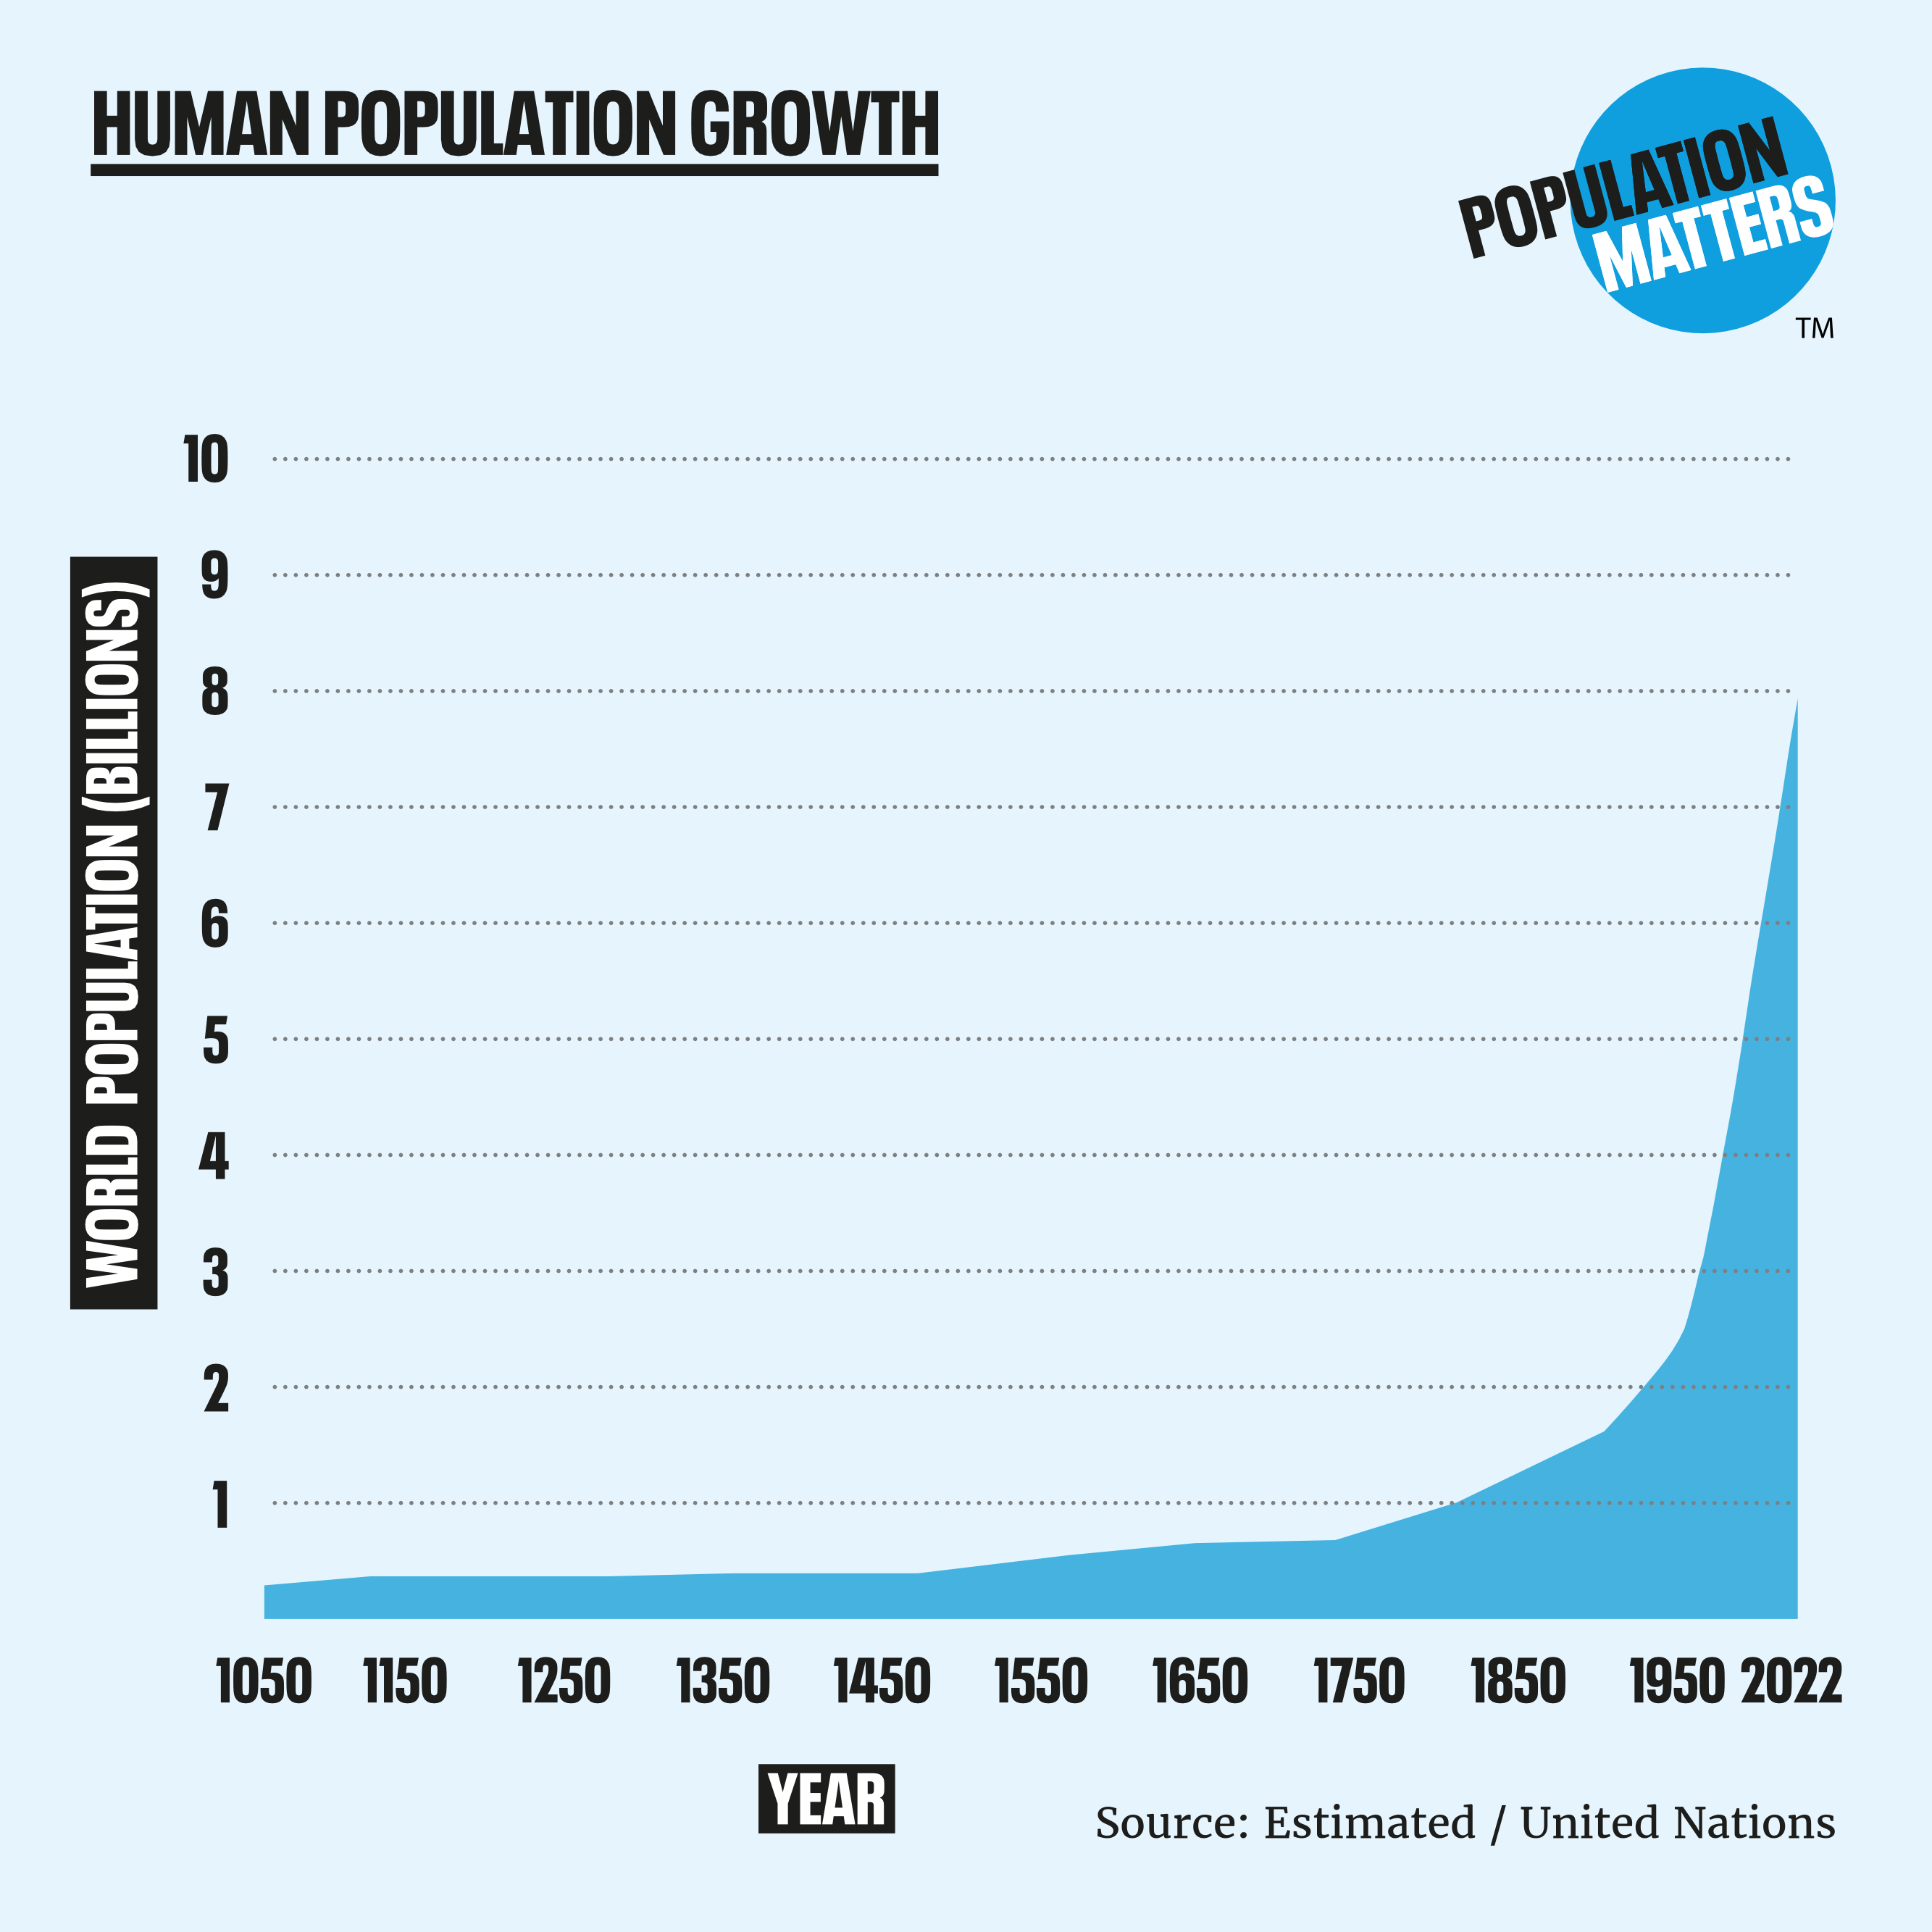 World Population Facts - Population Matters